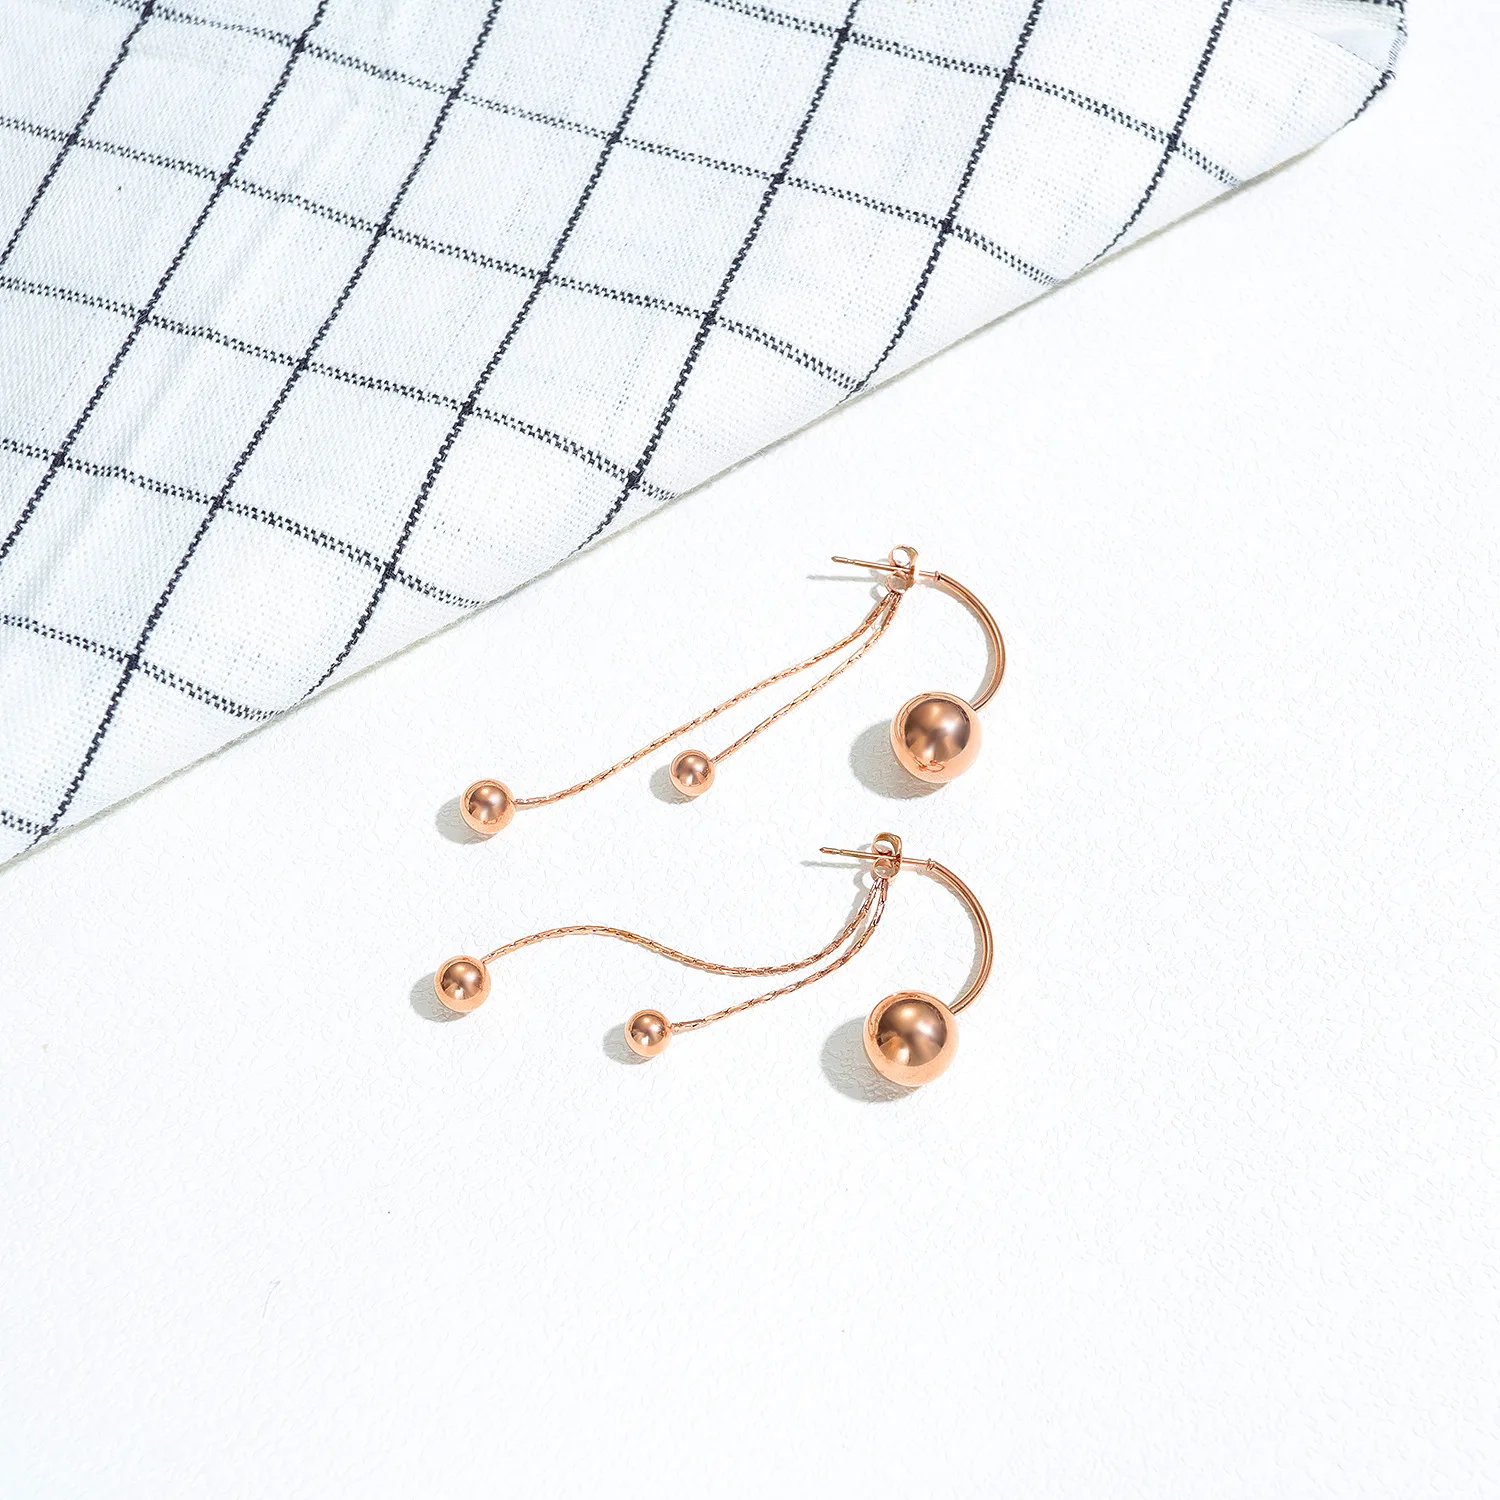 2020 korean jewelry earrings women stainless steel rose gold ball tassel earrings